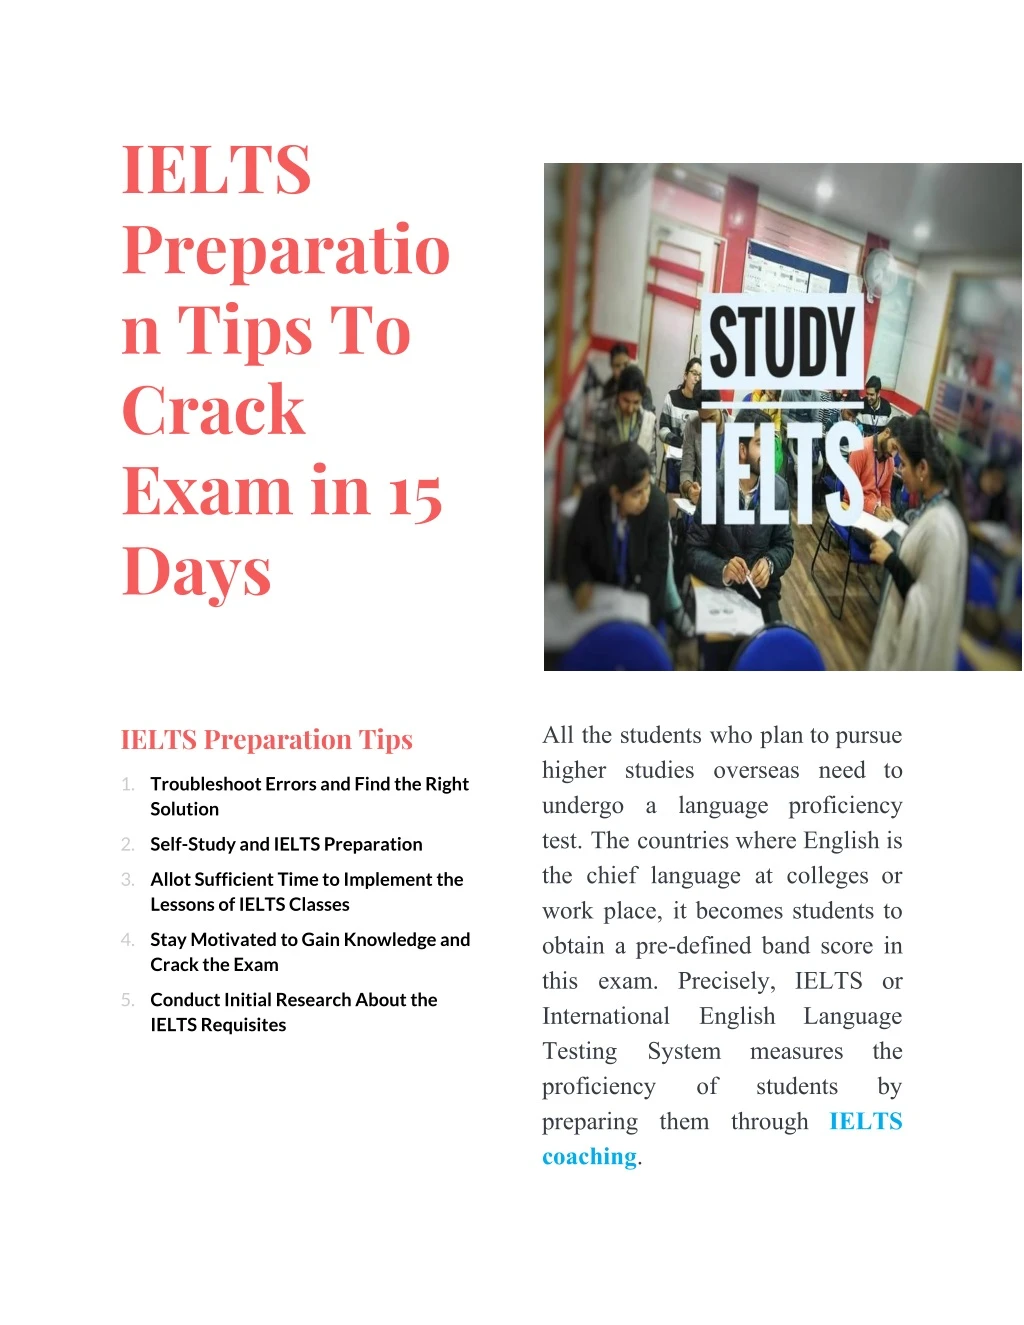 ielts preparatio n tips to crack exam in 15 days